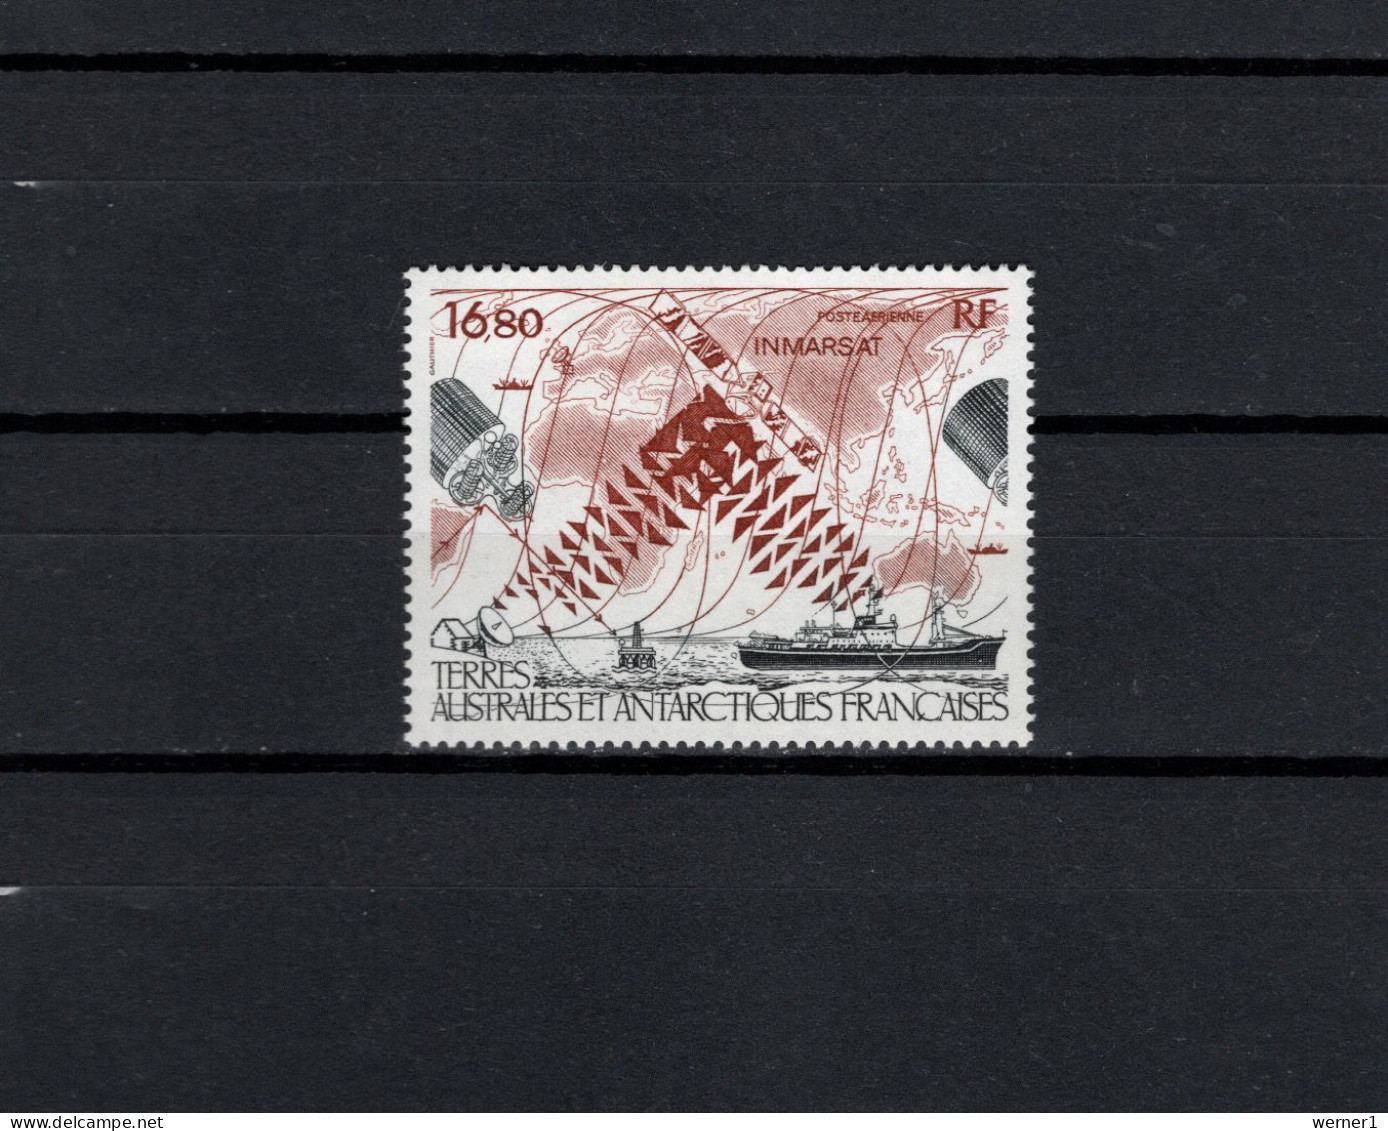 FSAT French Antarctic Territory 1987 Space, INMARSAT Stamp MNH - Oceania